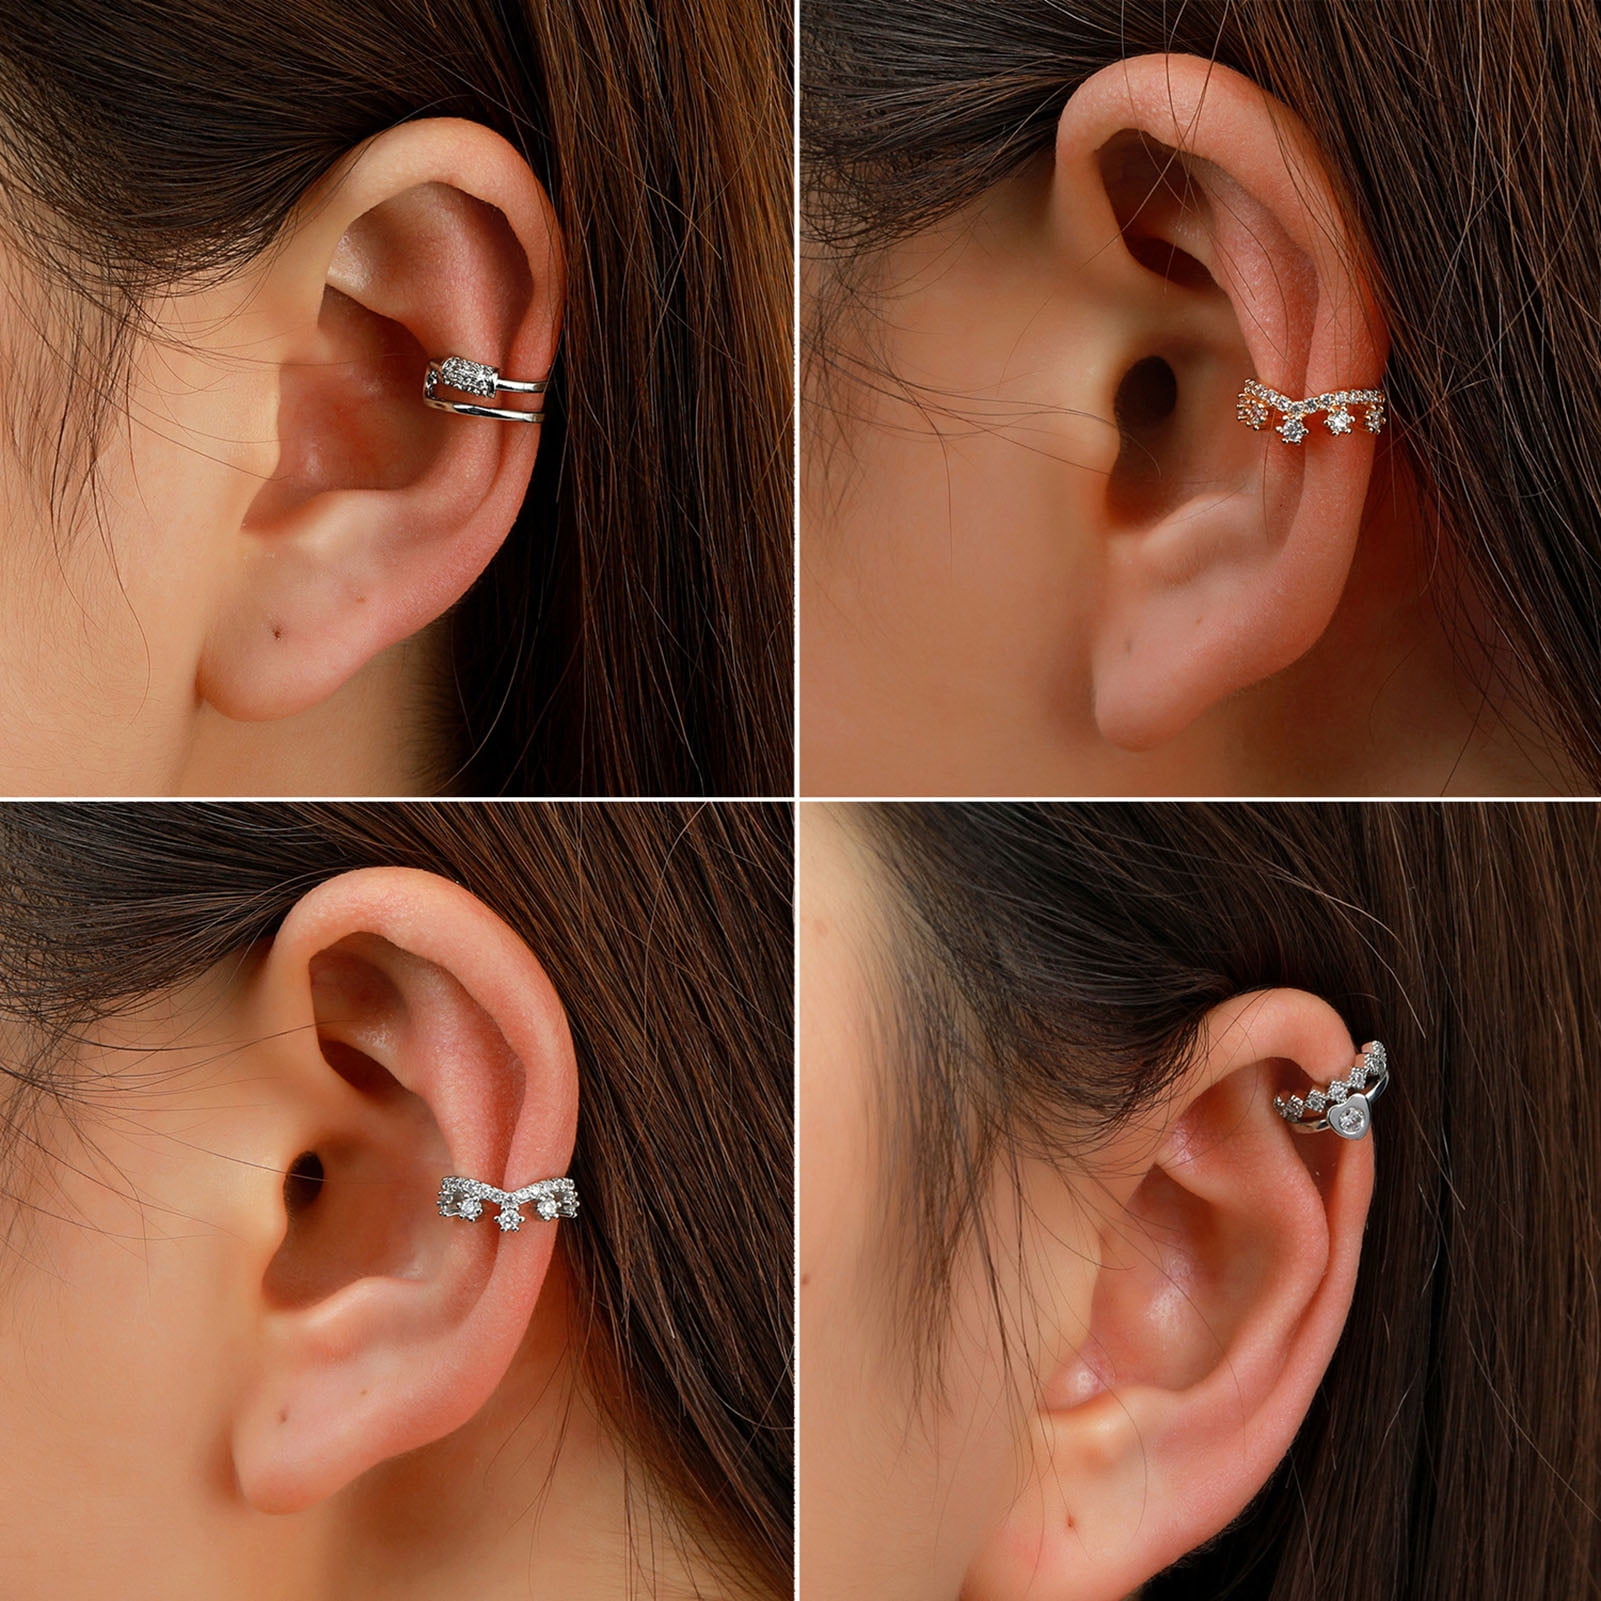 1set 5pcs Silver Tone Leaf Shaped Ear Cuffs No Piercing Fashionable  Double-layer Ear Bone Clip Earrings For Women, Jewelry Gift